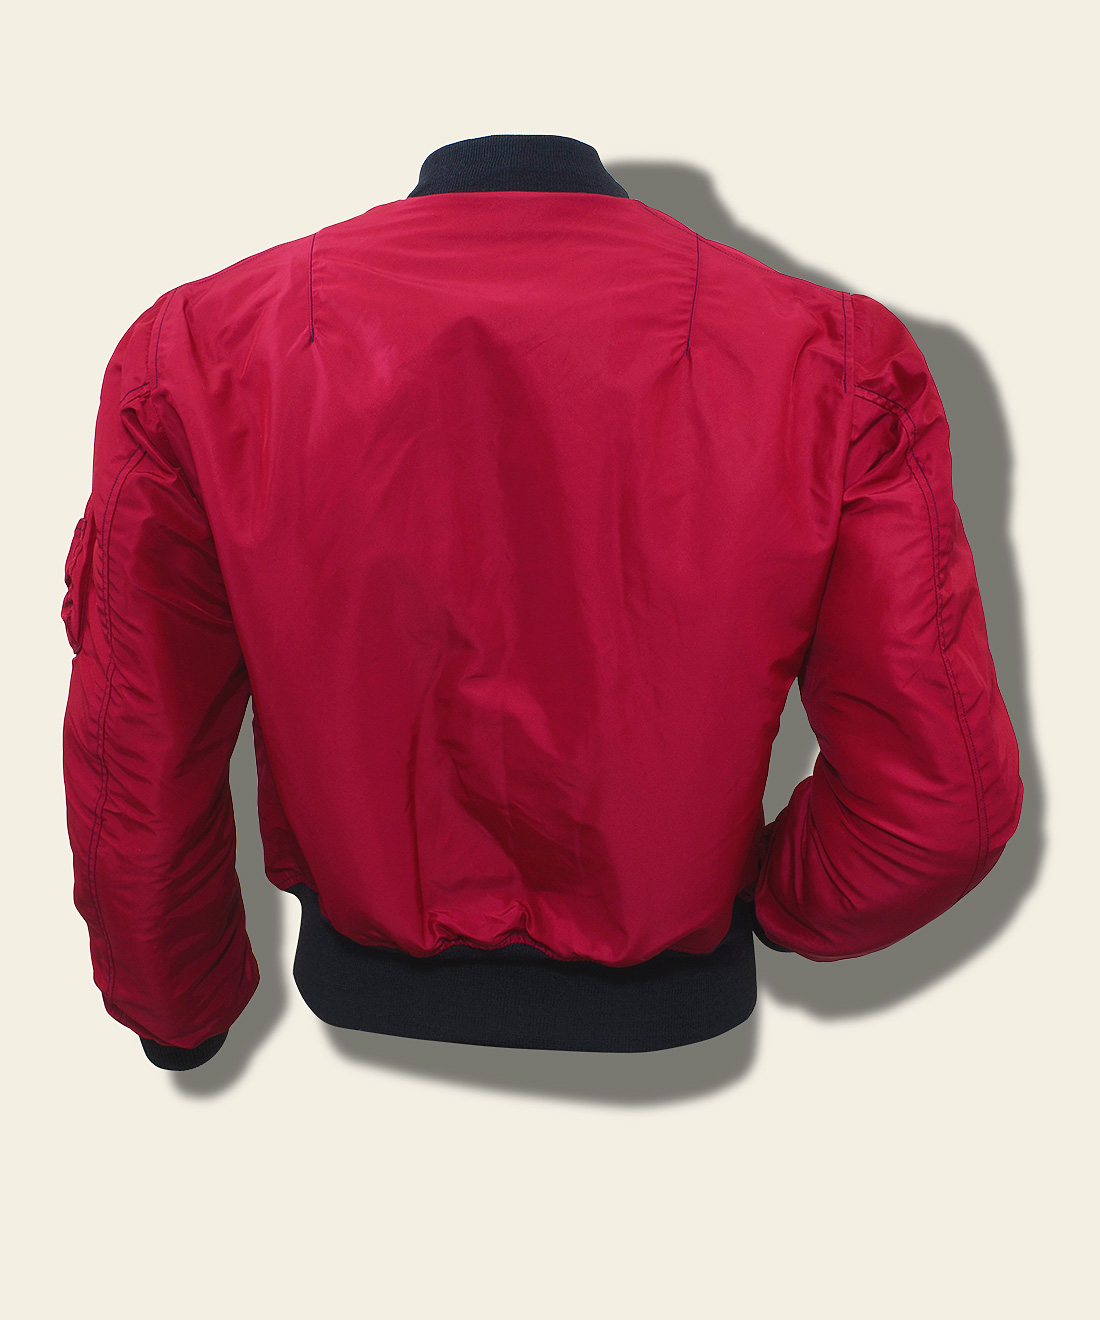 br13860 buzz rickson ma-1 jacket red web back.jpg